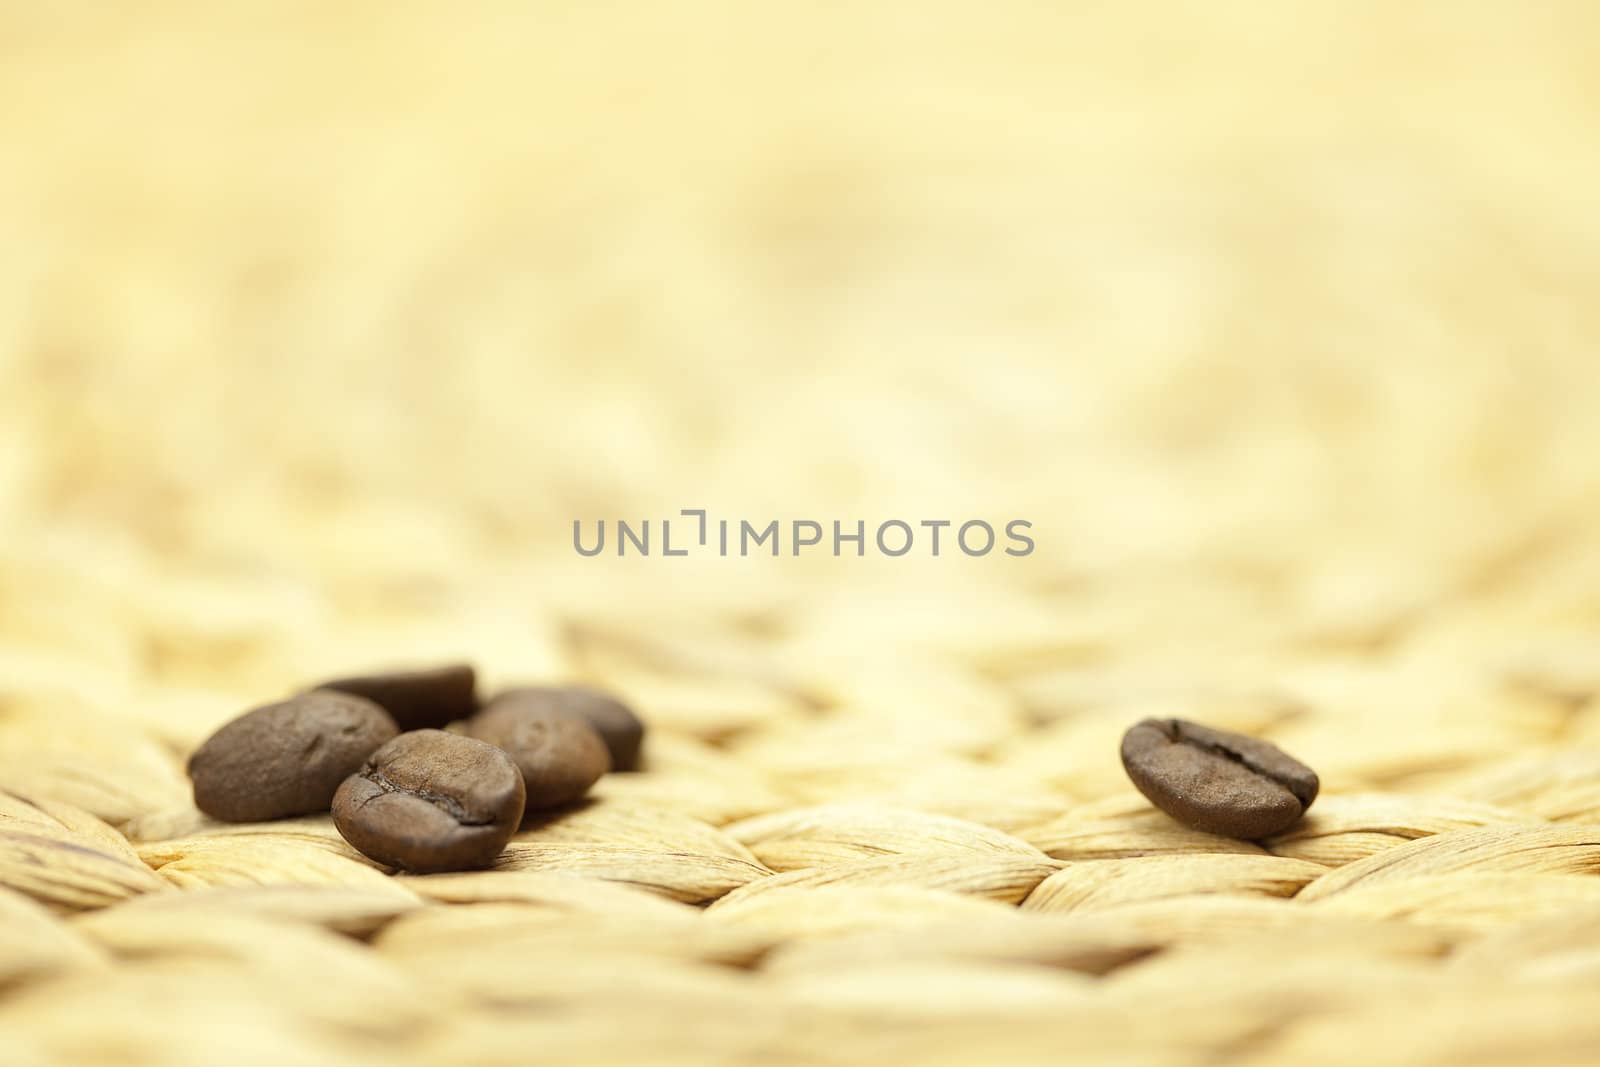 coffee beans   on a wicker mat